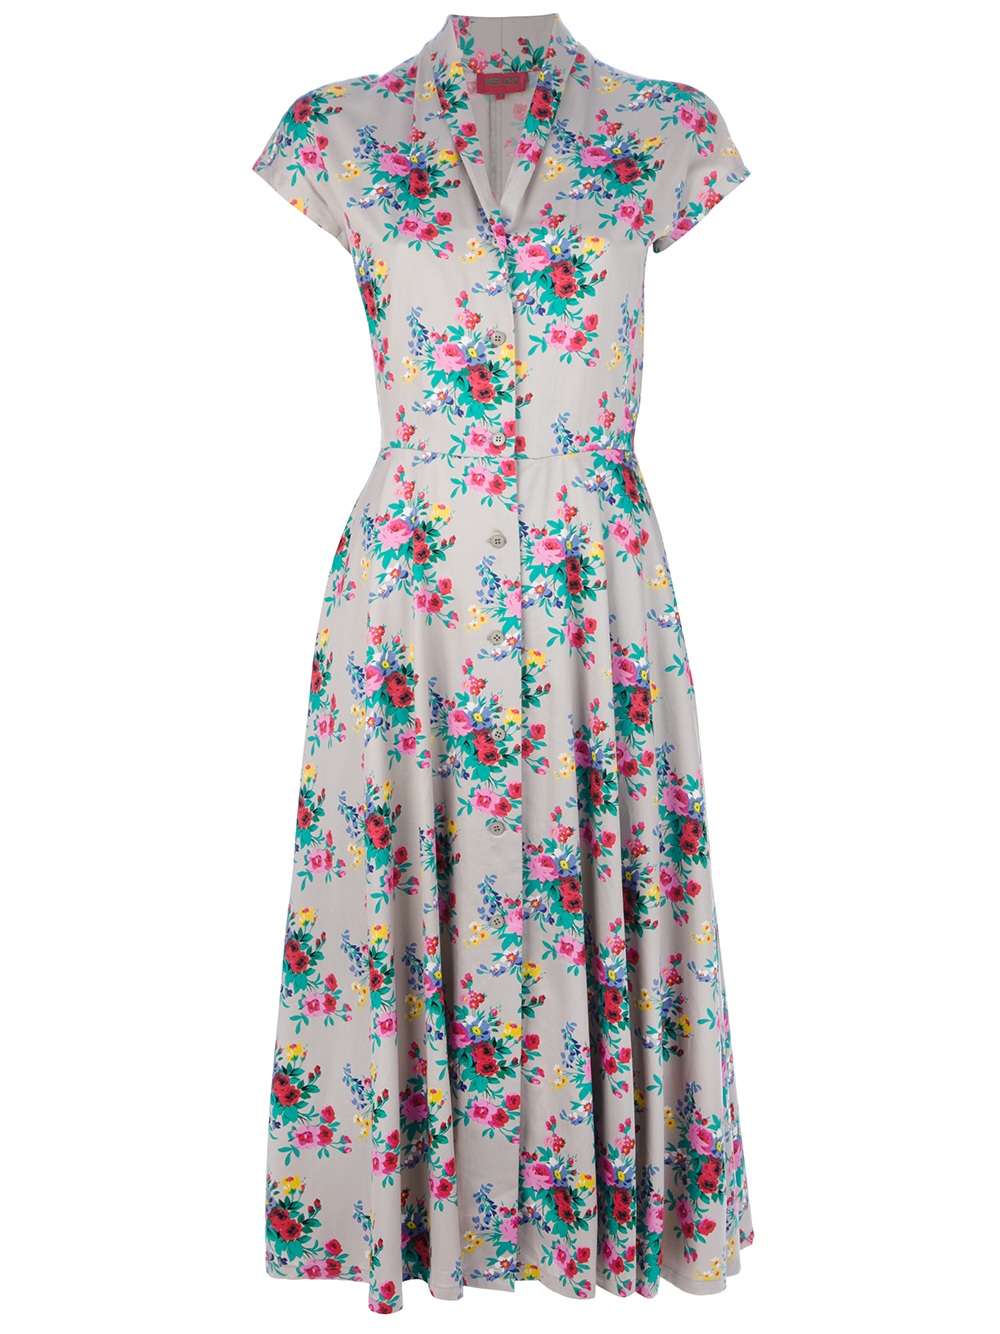 Kenzo Vintage Floral Print Dress in Floral | Lyst